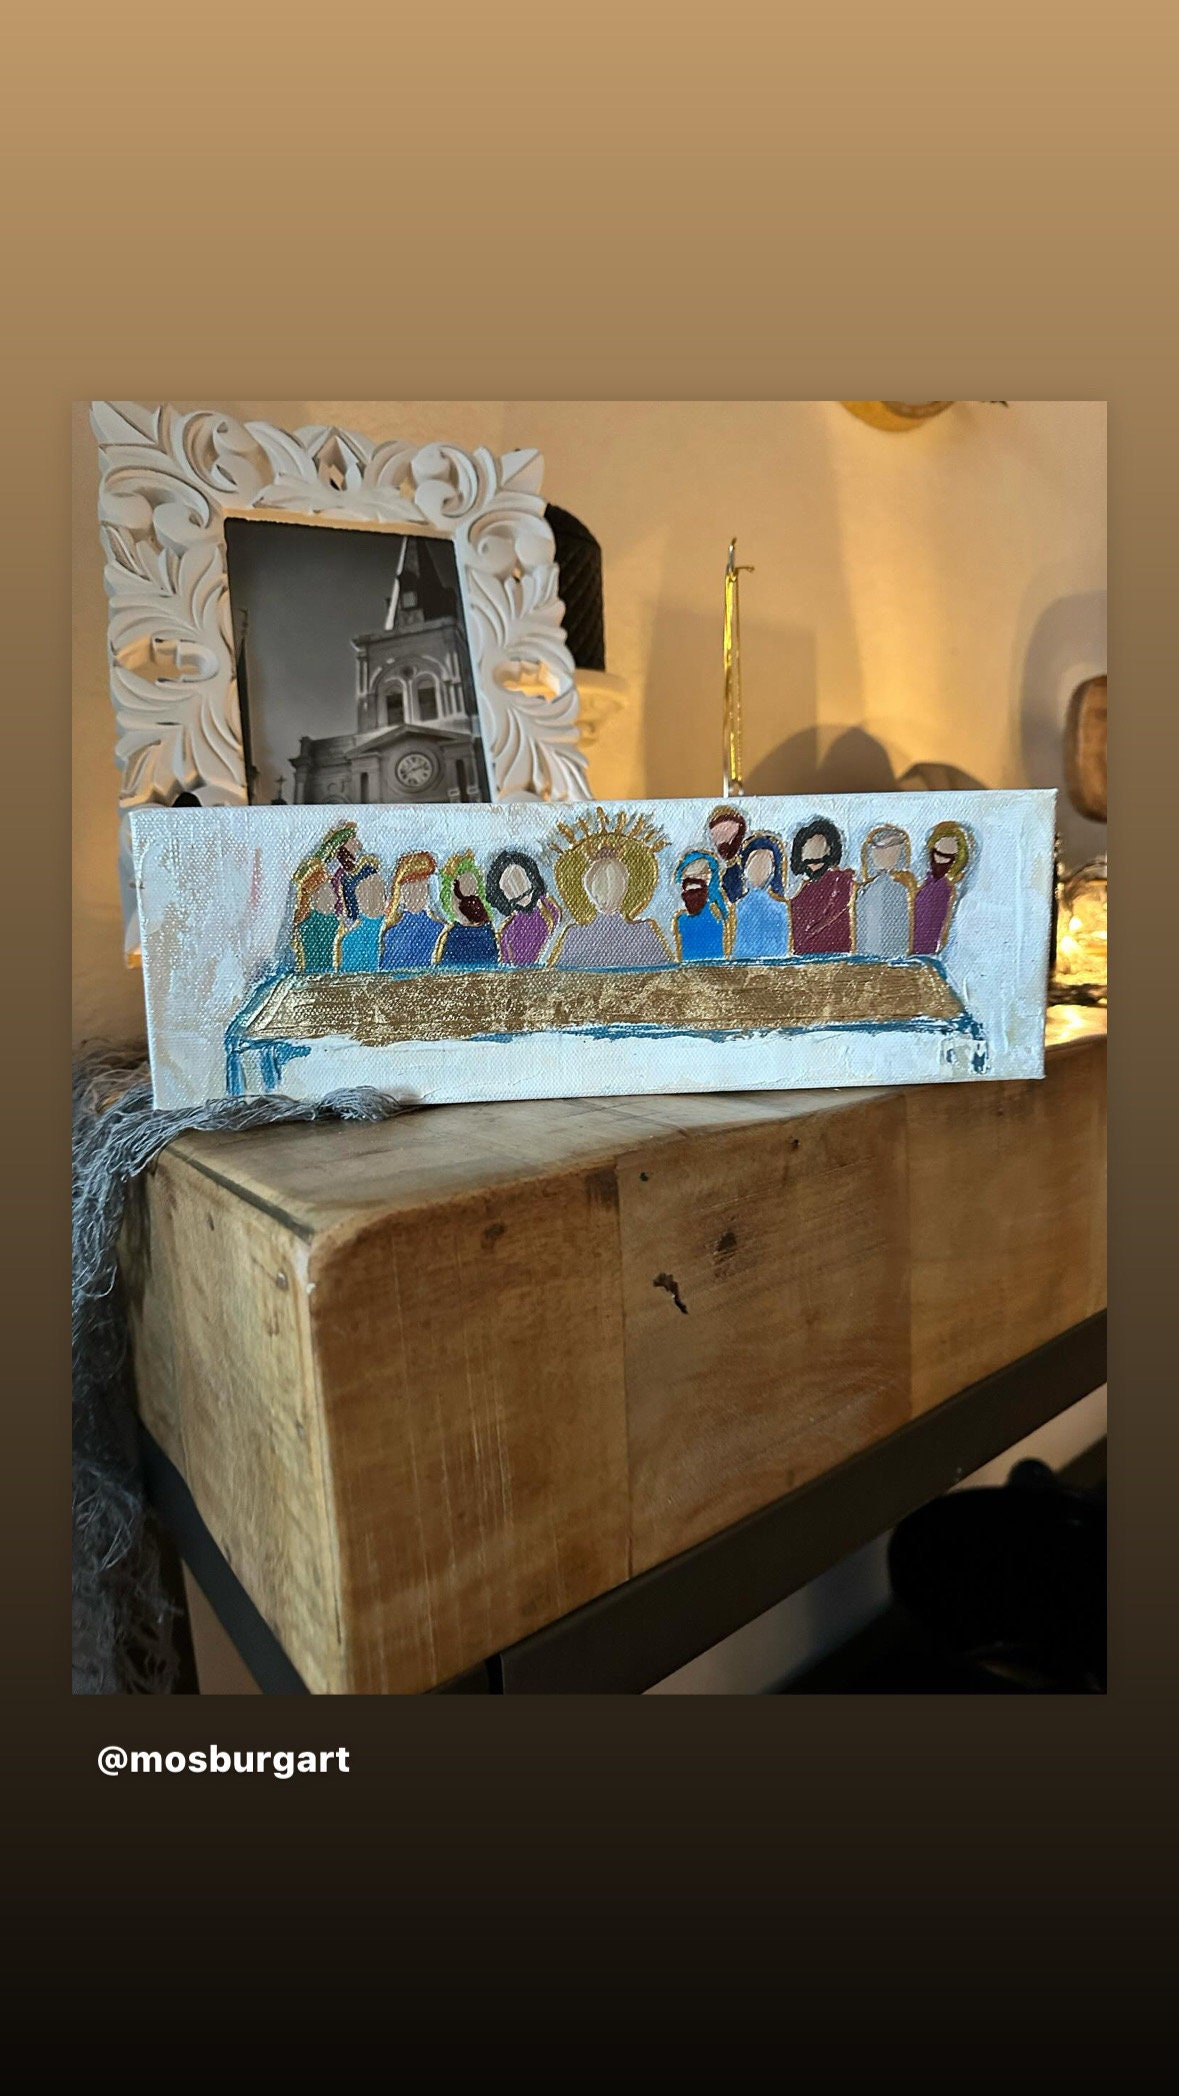 Jesus Last Supper Painting, Christian Religious Wall Art, Catholic